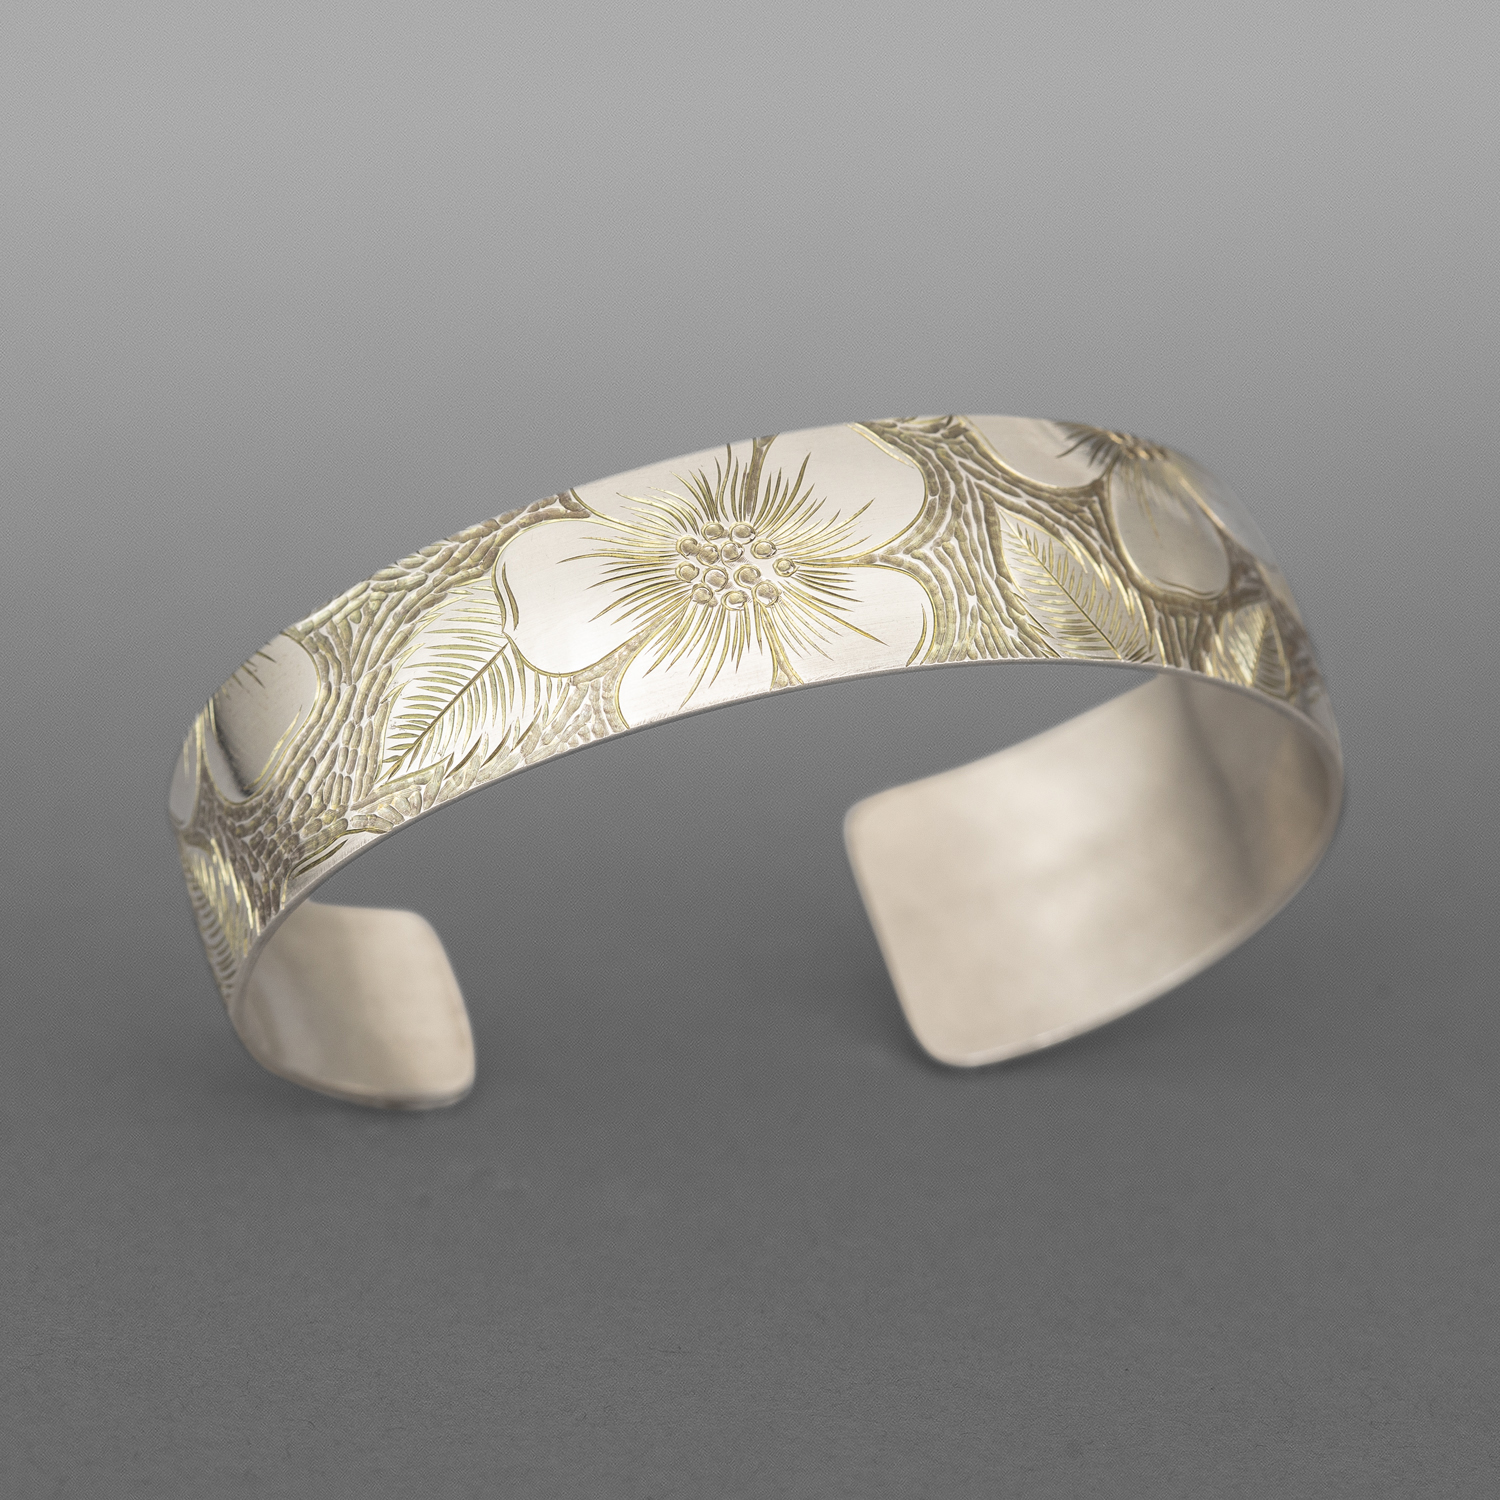 Wild Rose & Butterfly Bracelet
Jennifer Younger
Tlingit
Patinated sterling silver
6"x ¾”
$380